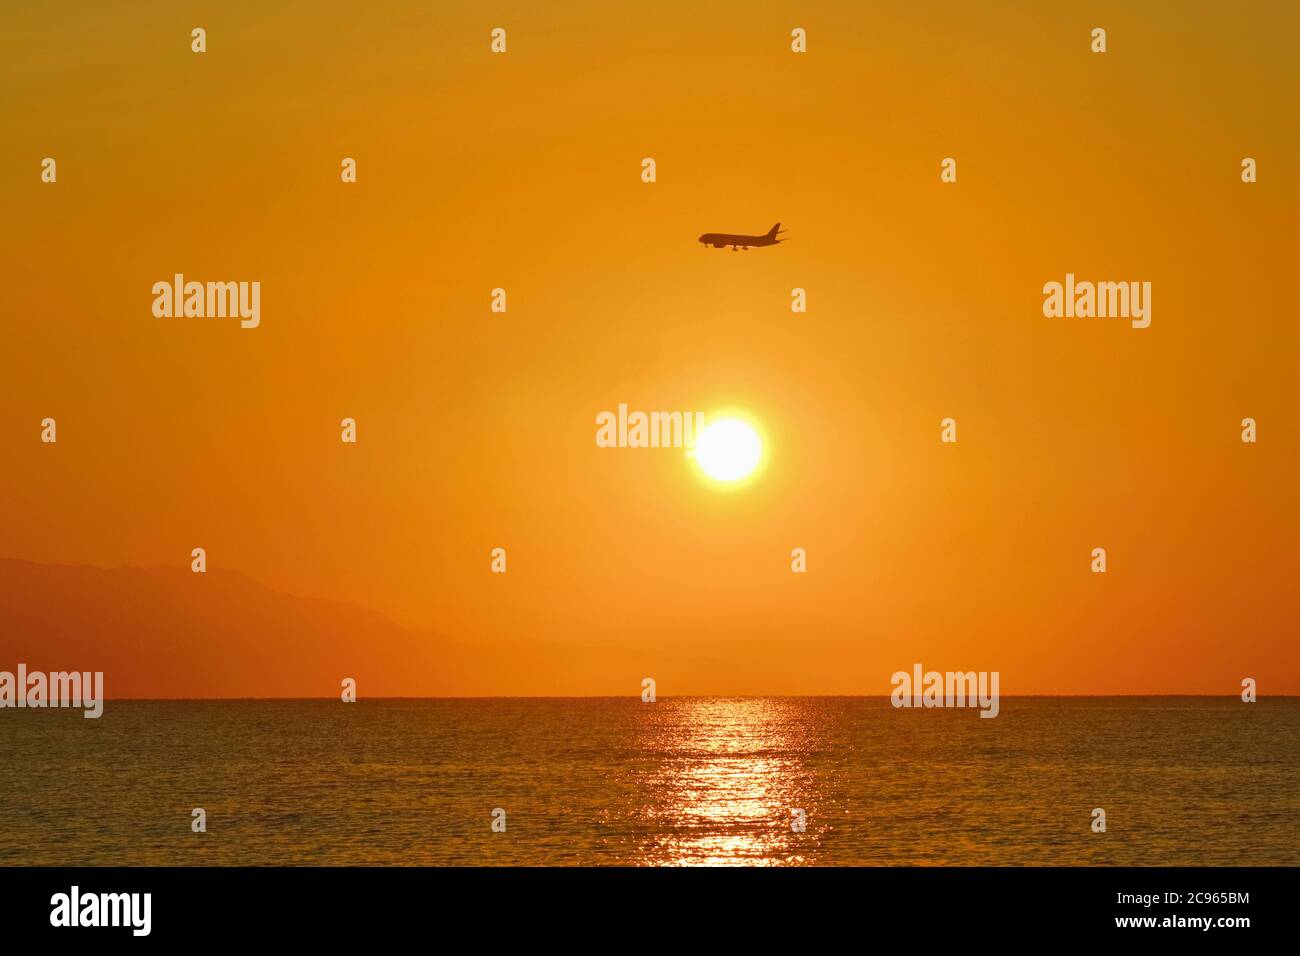 Sonnenaufgang über dem Meer. Flugzeug kommt an Land. Stockfoto